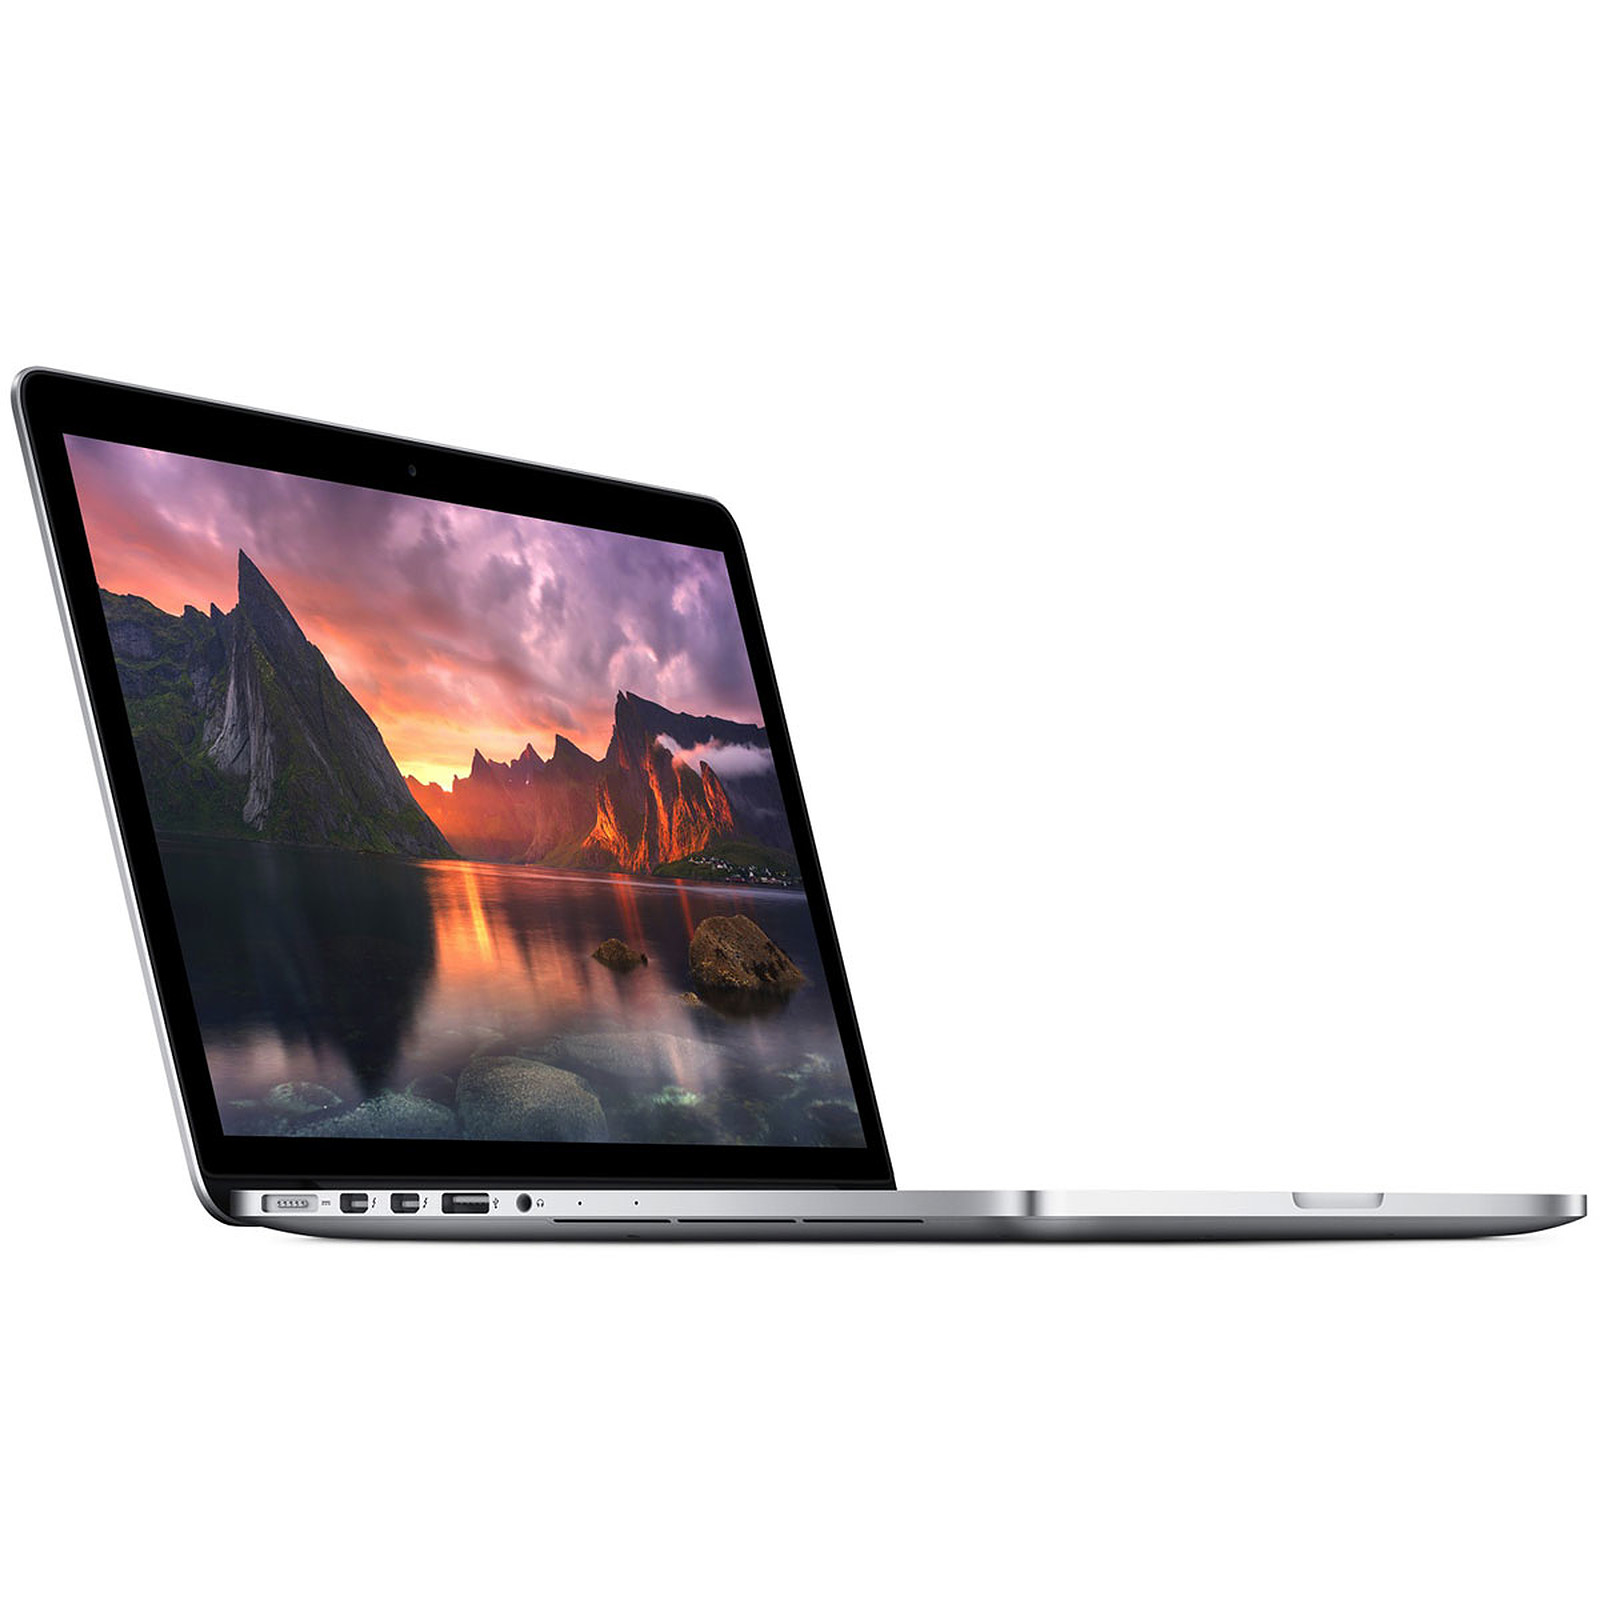 Teхника Apple - MacBook - Срочный ремонт MacBook Pro 15" (A1398)